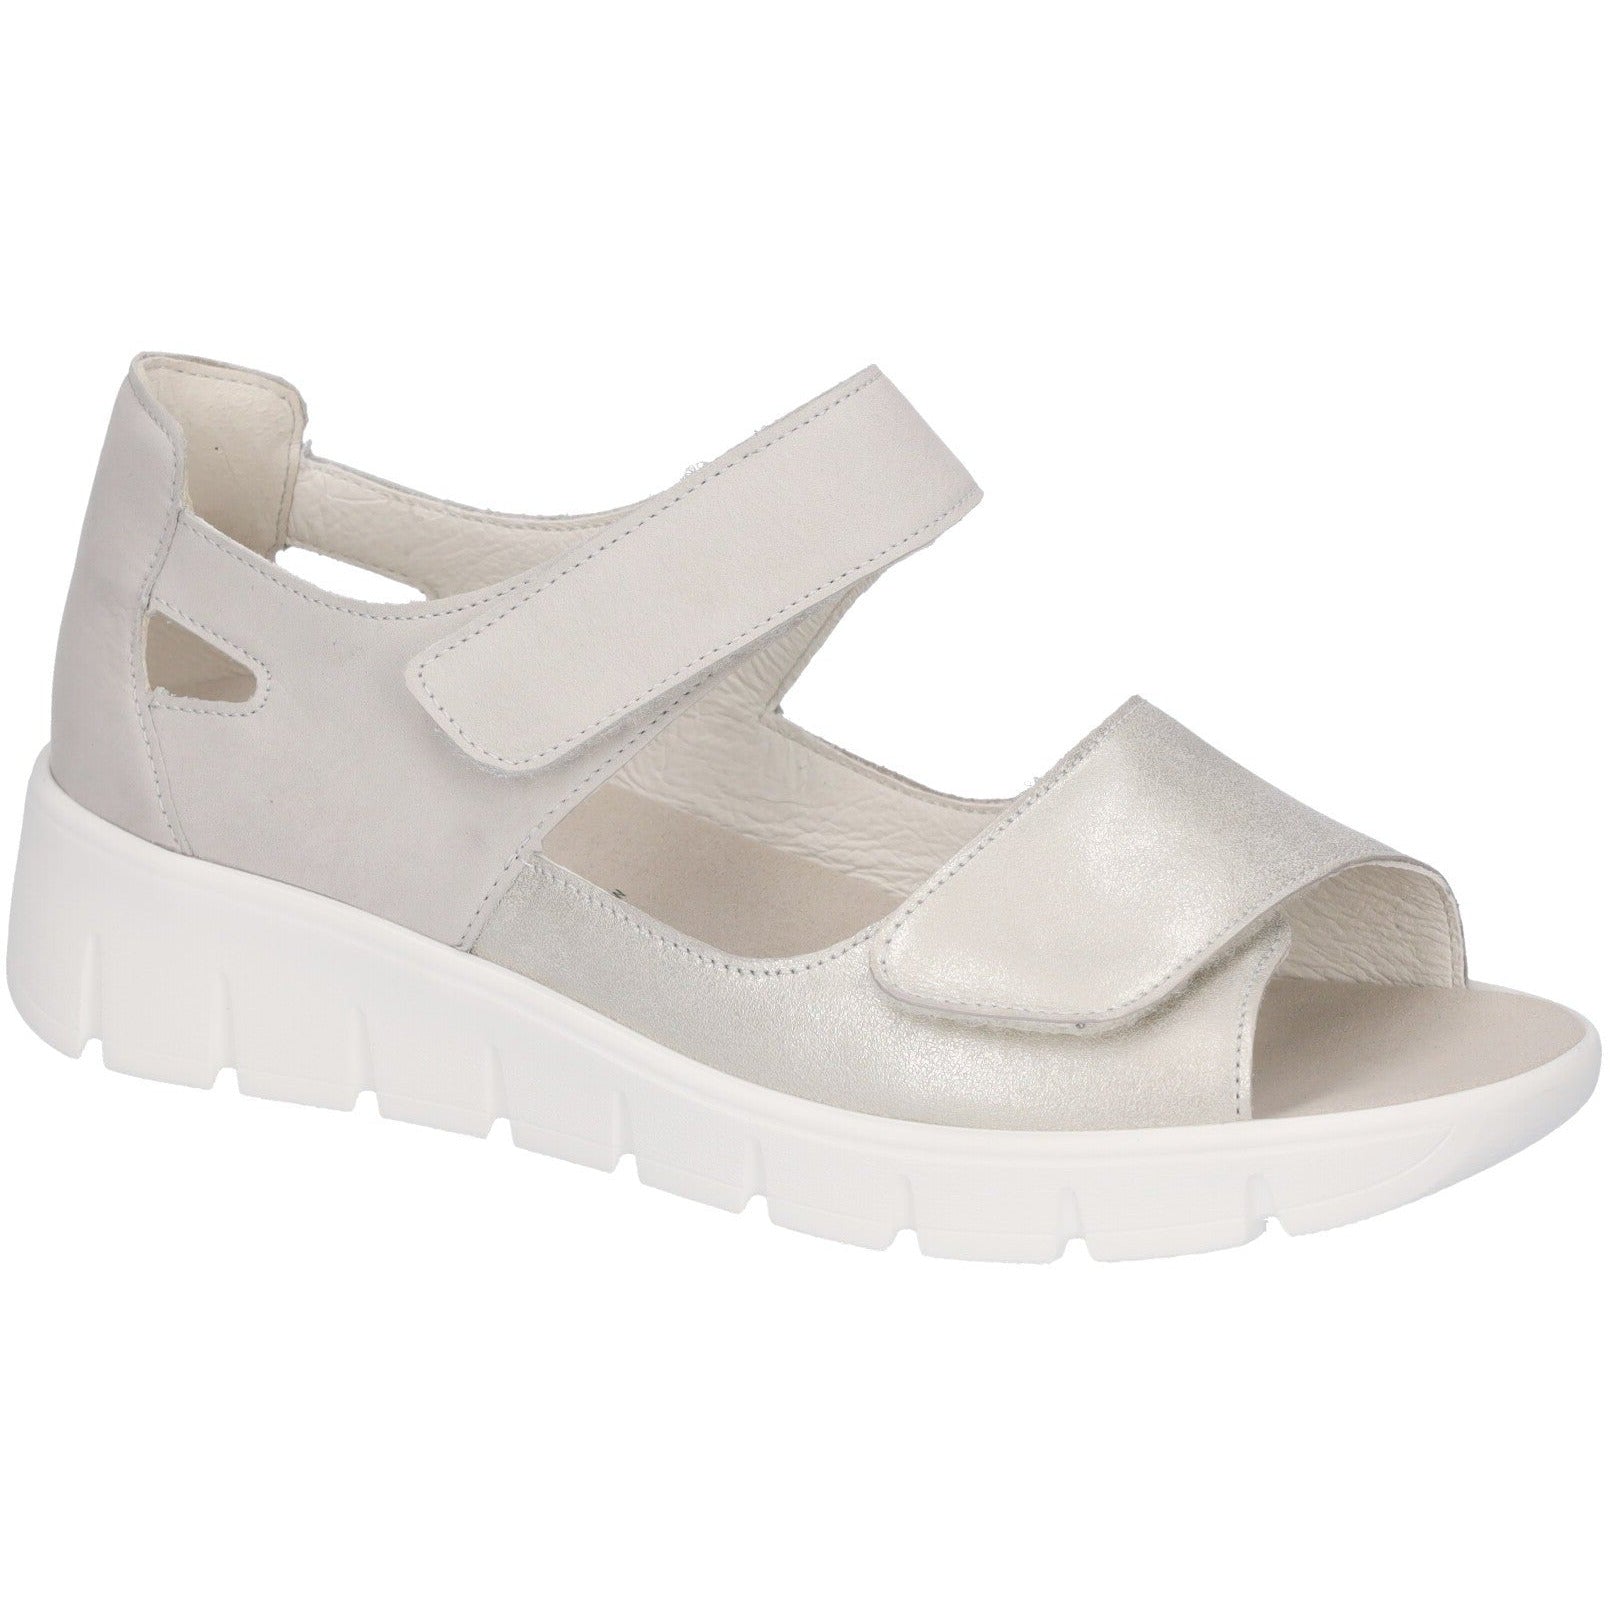 Drew Lagoon Sandals | Wedge sandals, Versatile sandals, Drew shoes